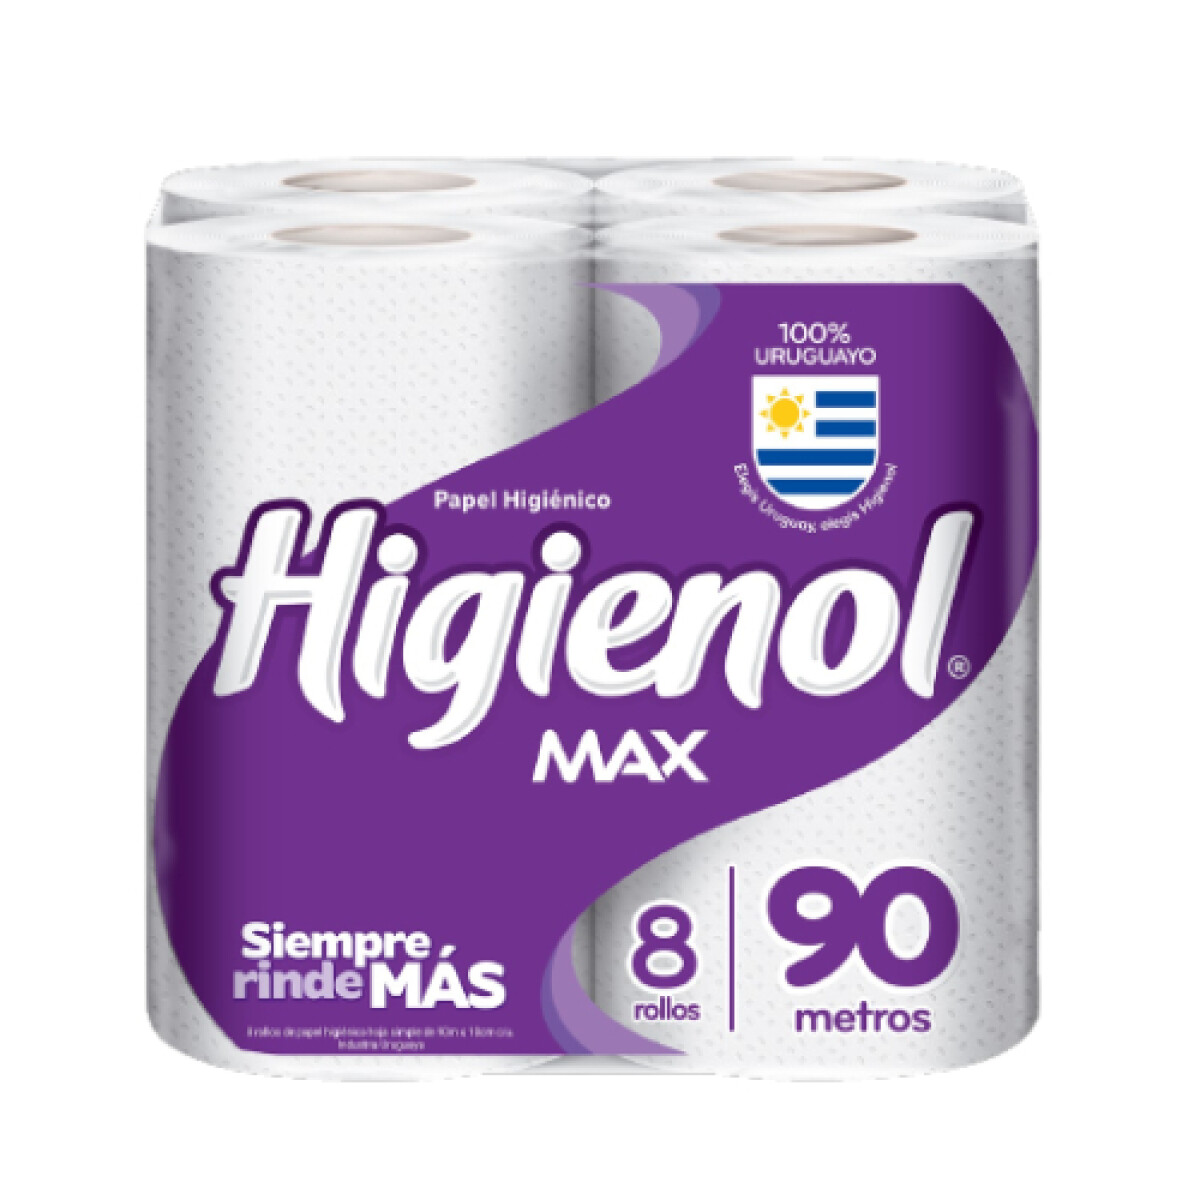 Higienol papel higiénico - Max 90 m x8 rollos 